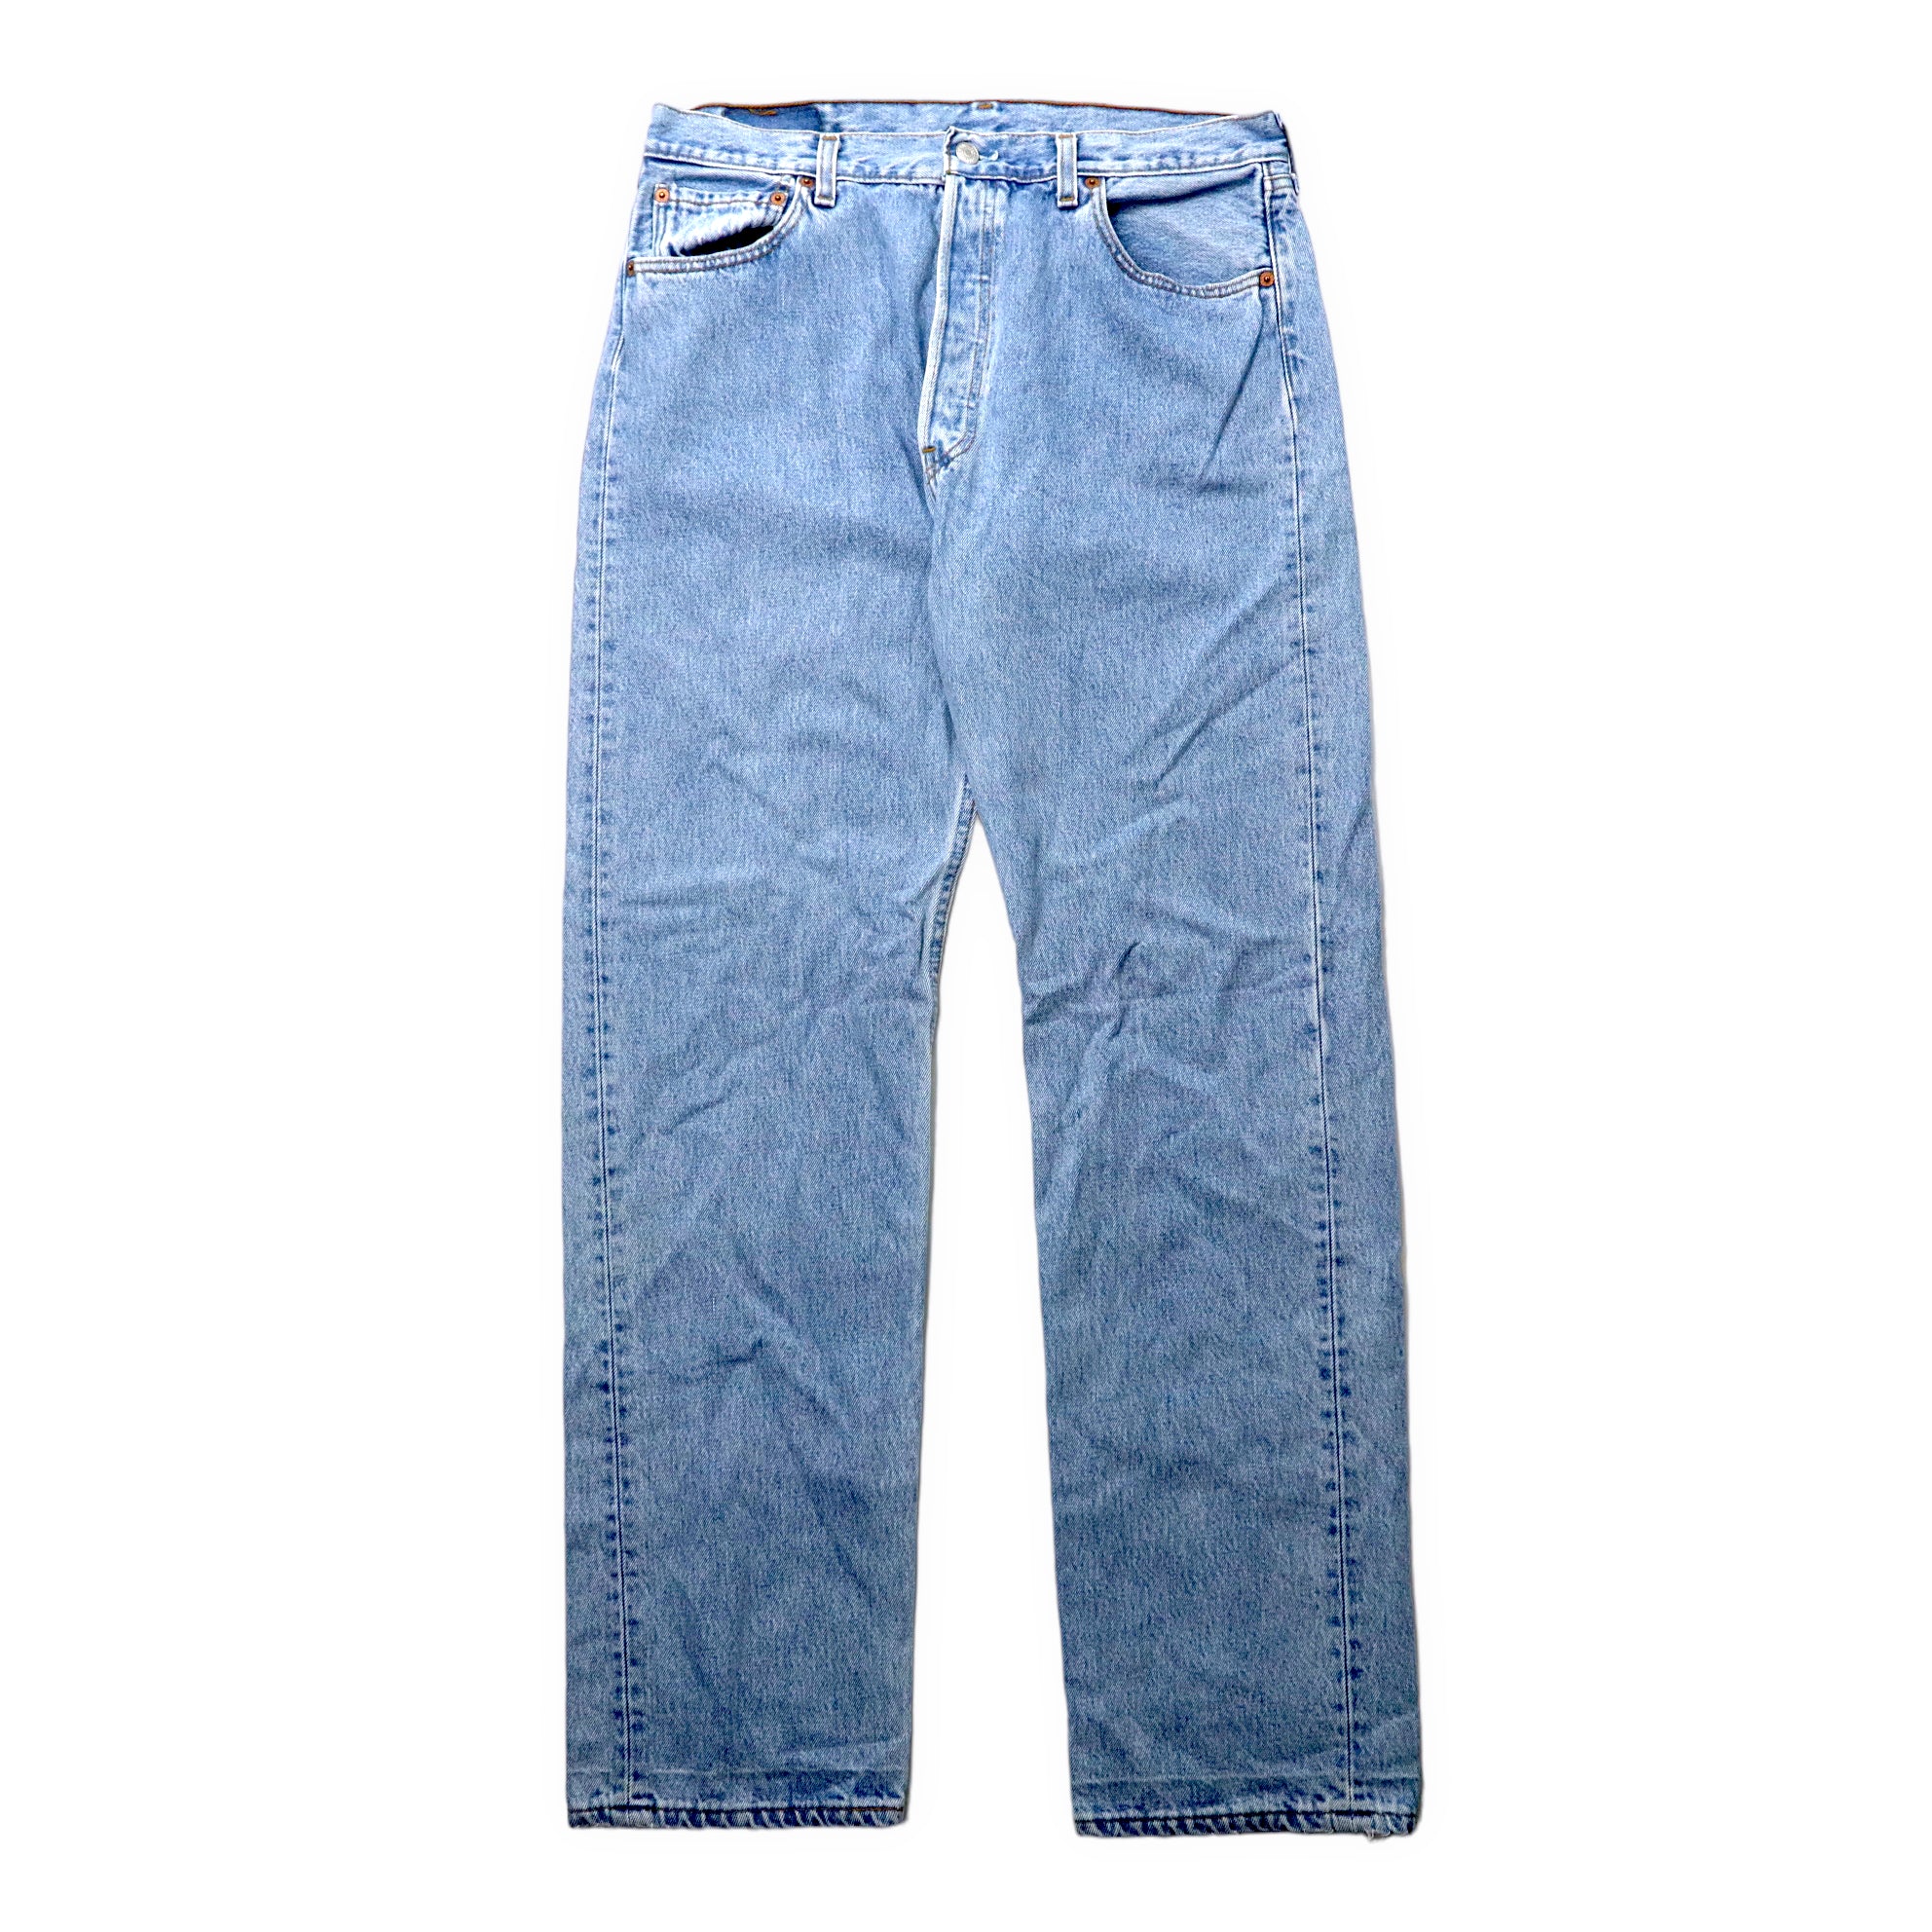 USA MADE LEVI'S 501 90s Denim Pants 36 Blue Ice Wash button Back